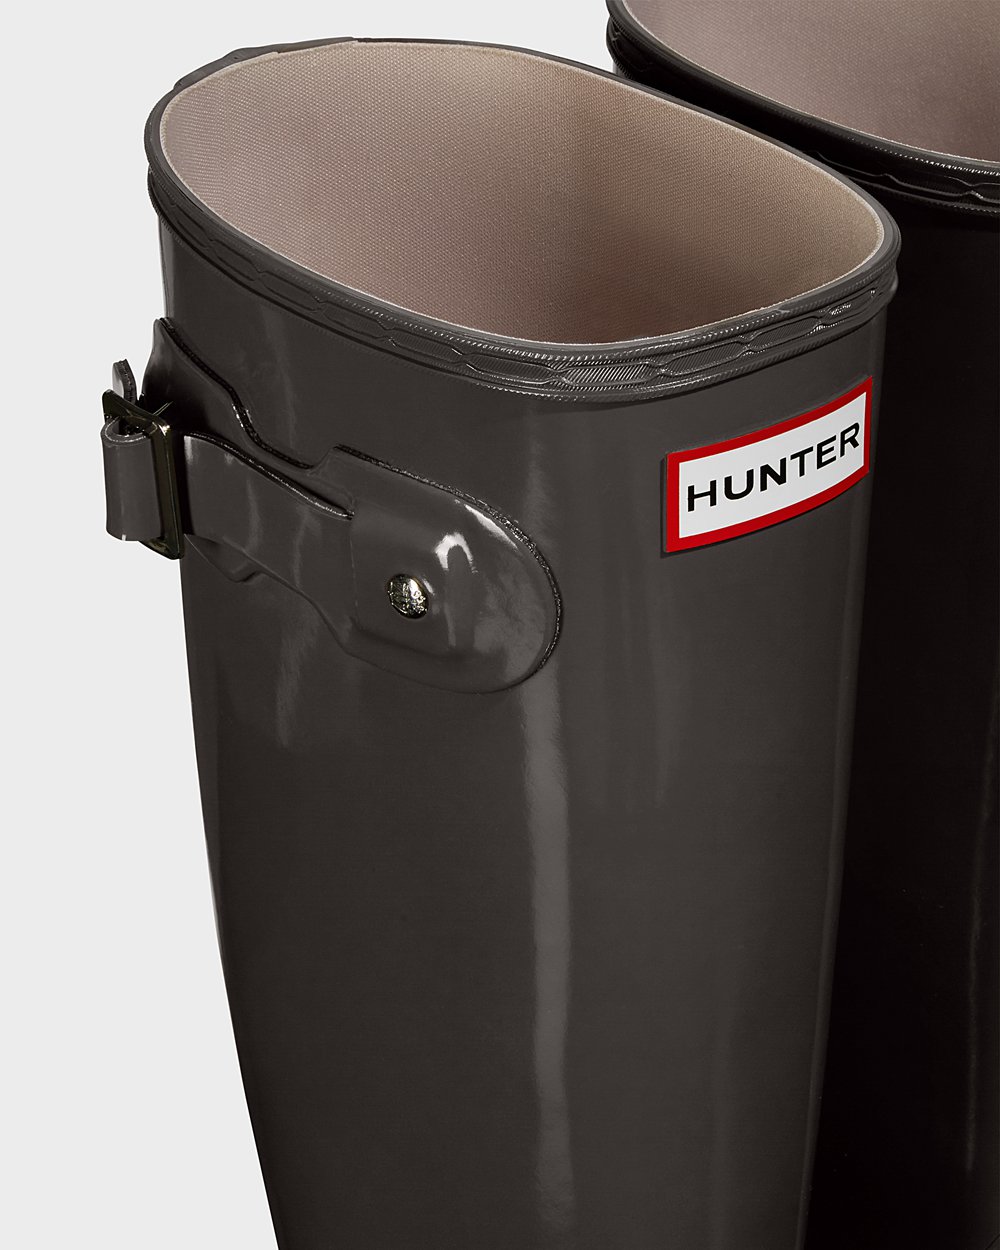 Womens Tall Rain Boots - Hunter Original Gloss (29SKQVTXU) - Grey